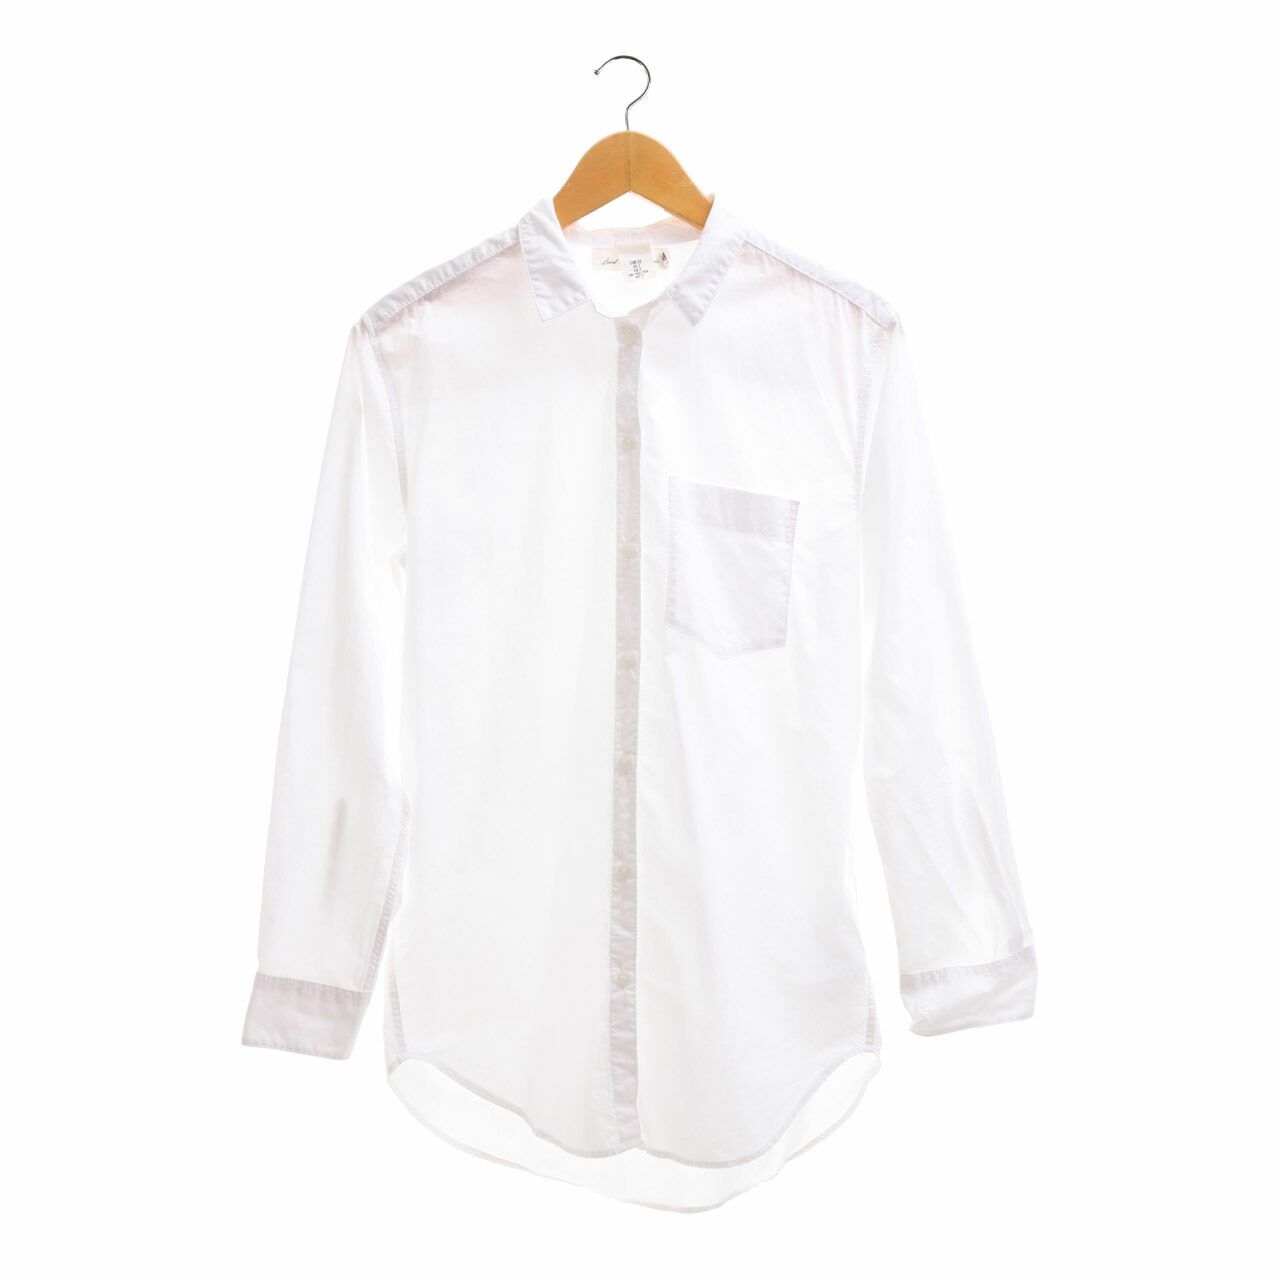 H&M White Shirt